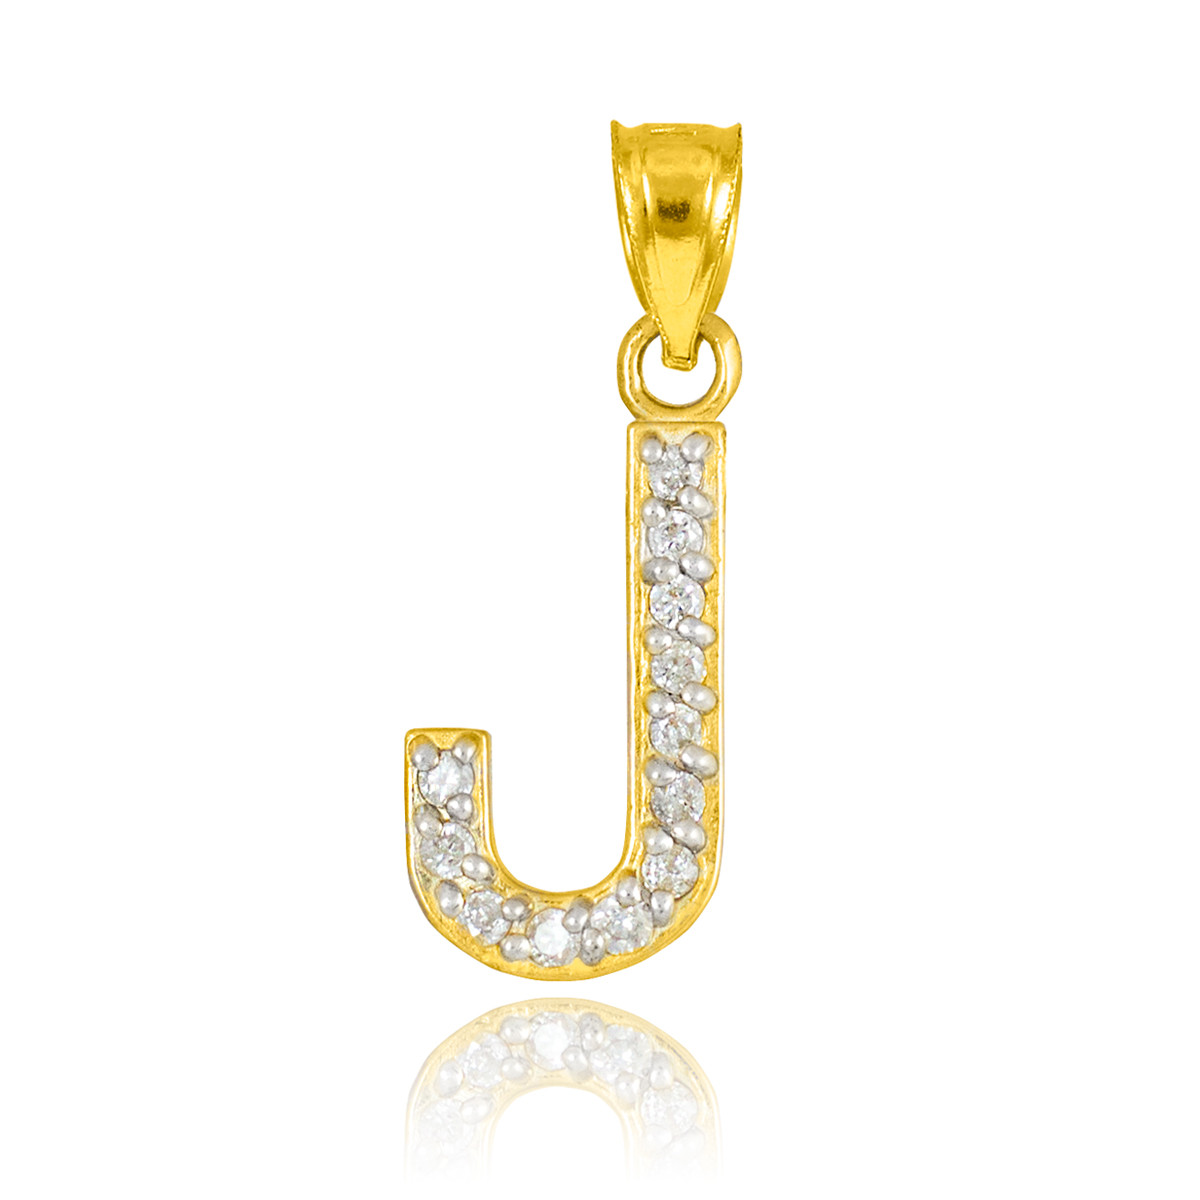 10k Letter "J" Initial Gold Pendant Necklace with Diamonds 0.12 ctw | eBay